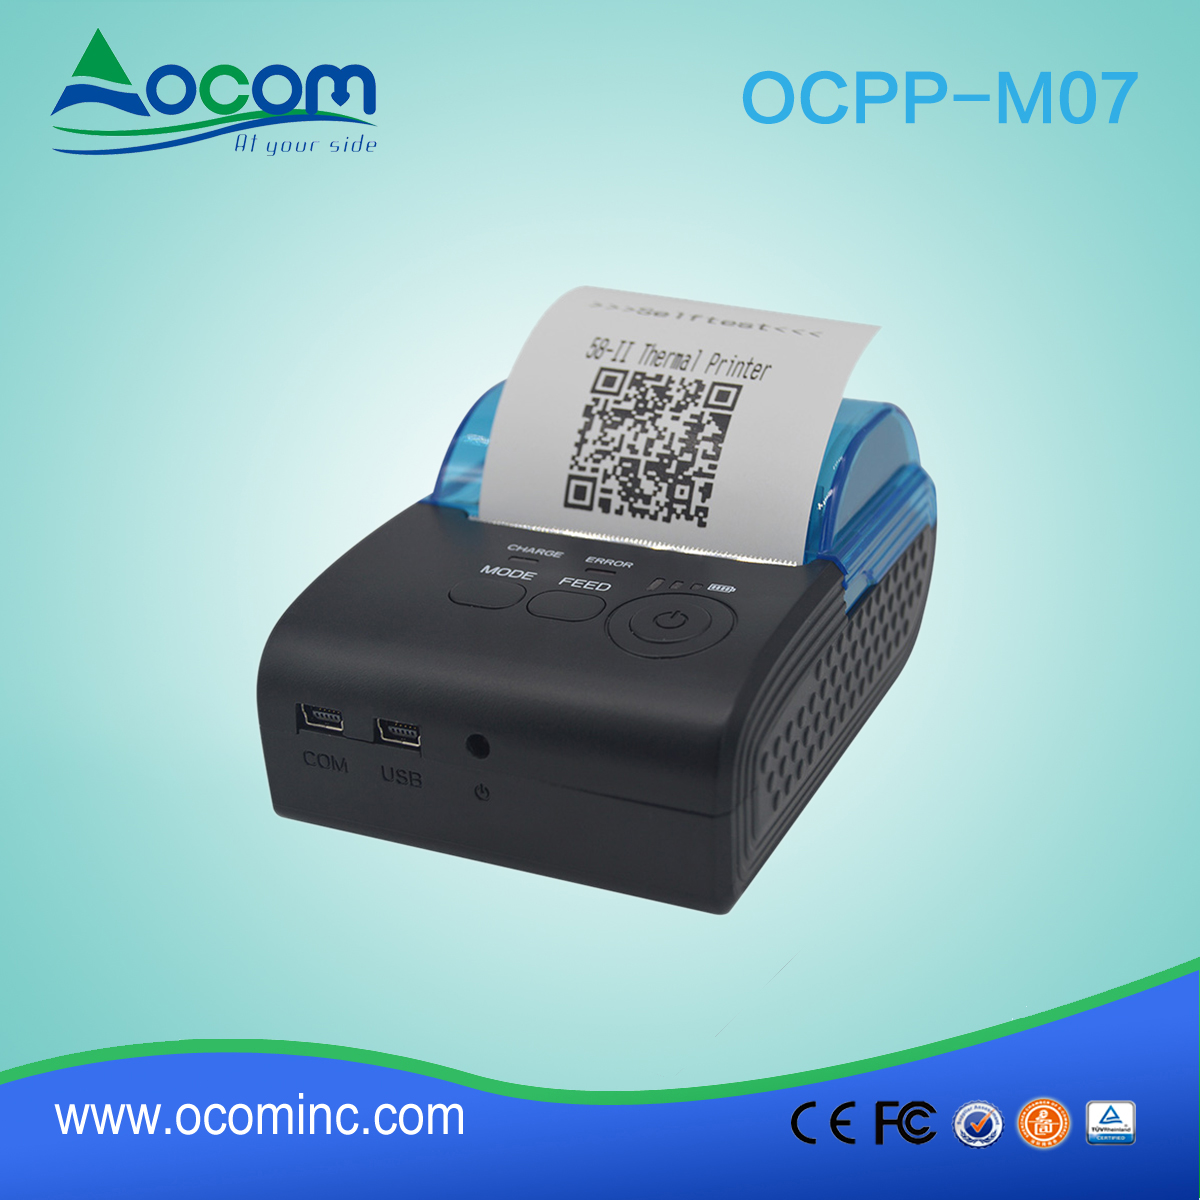 OCPP-M07 手持便携式蓝牙热敏收据打印机